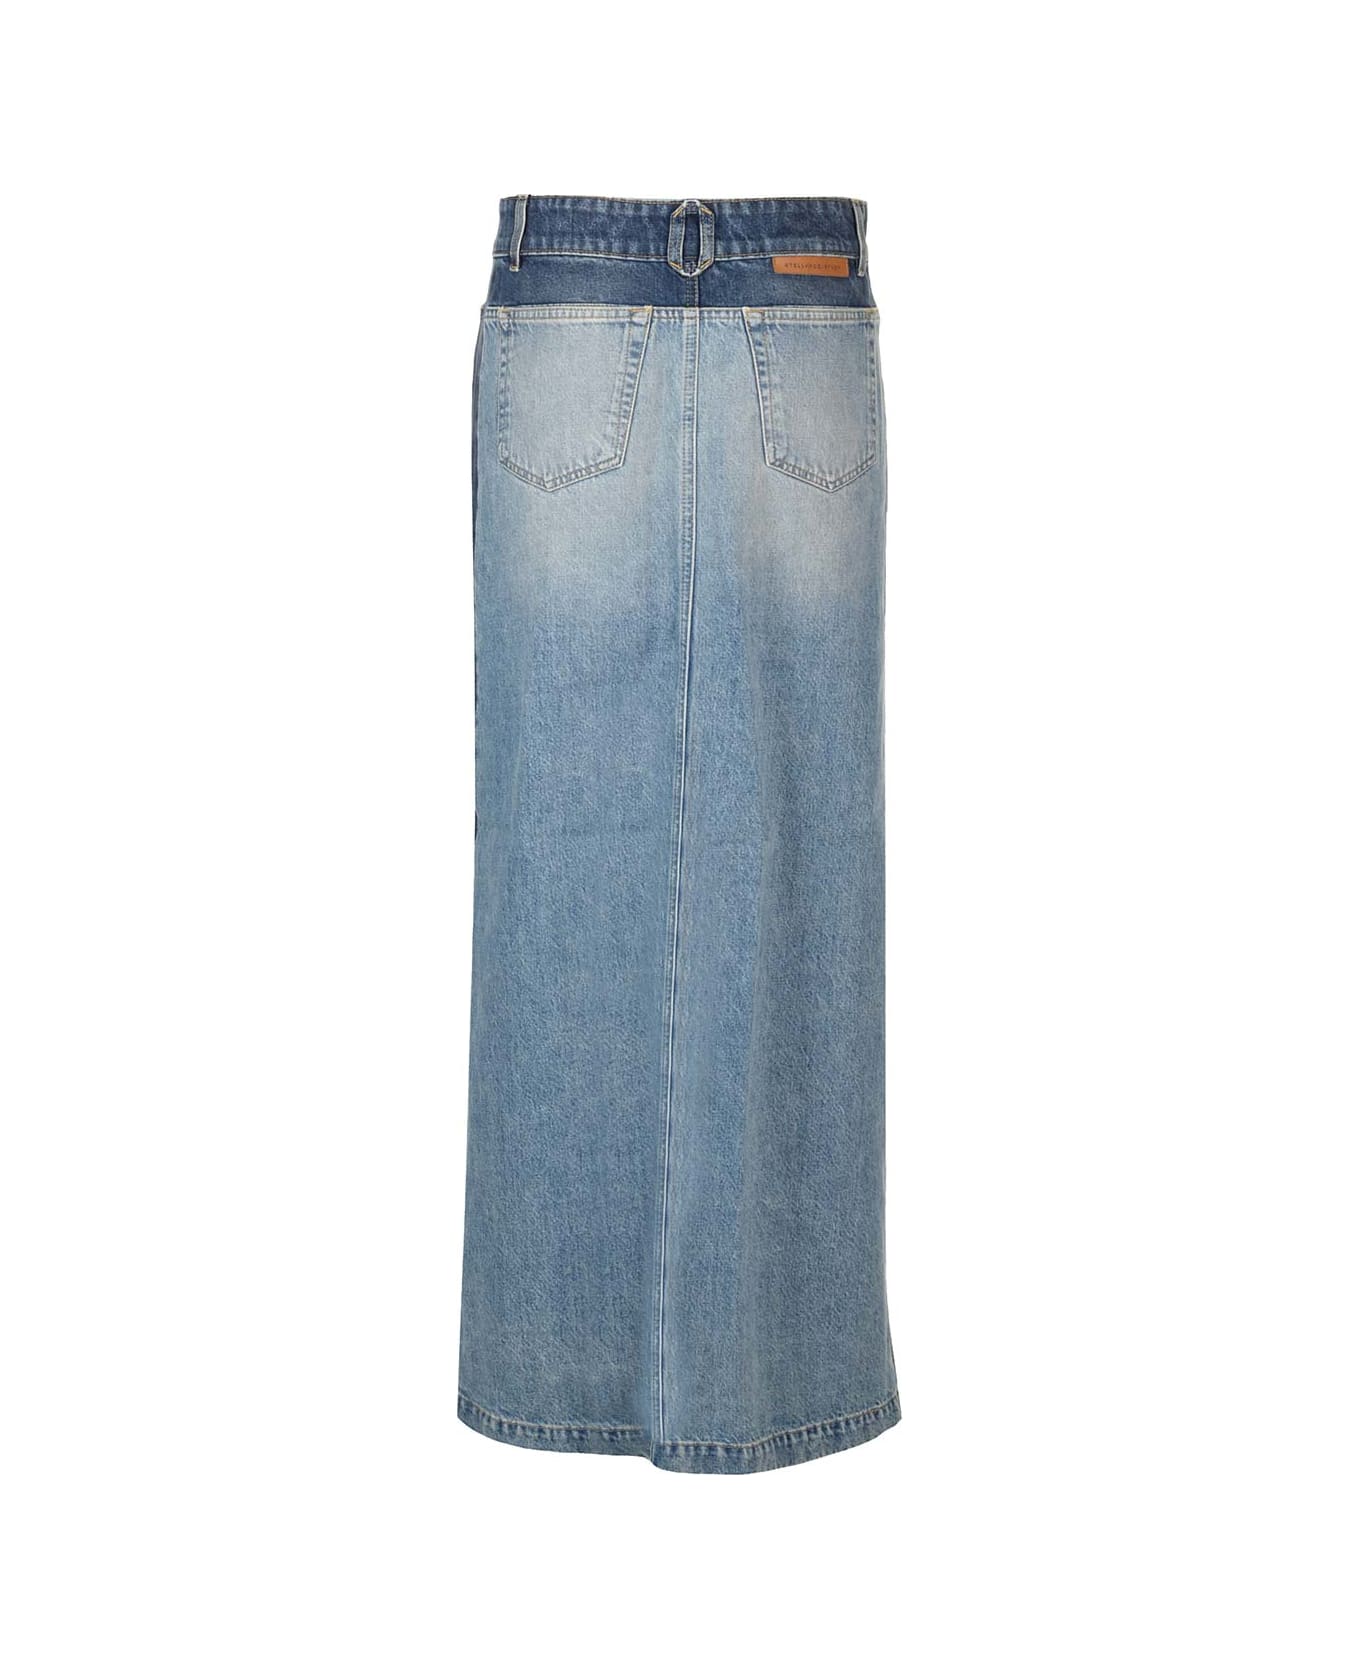 Stella McCartney Denim Skirt - MIDBLUE スカート